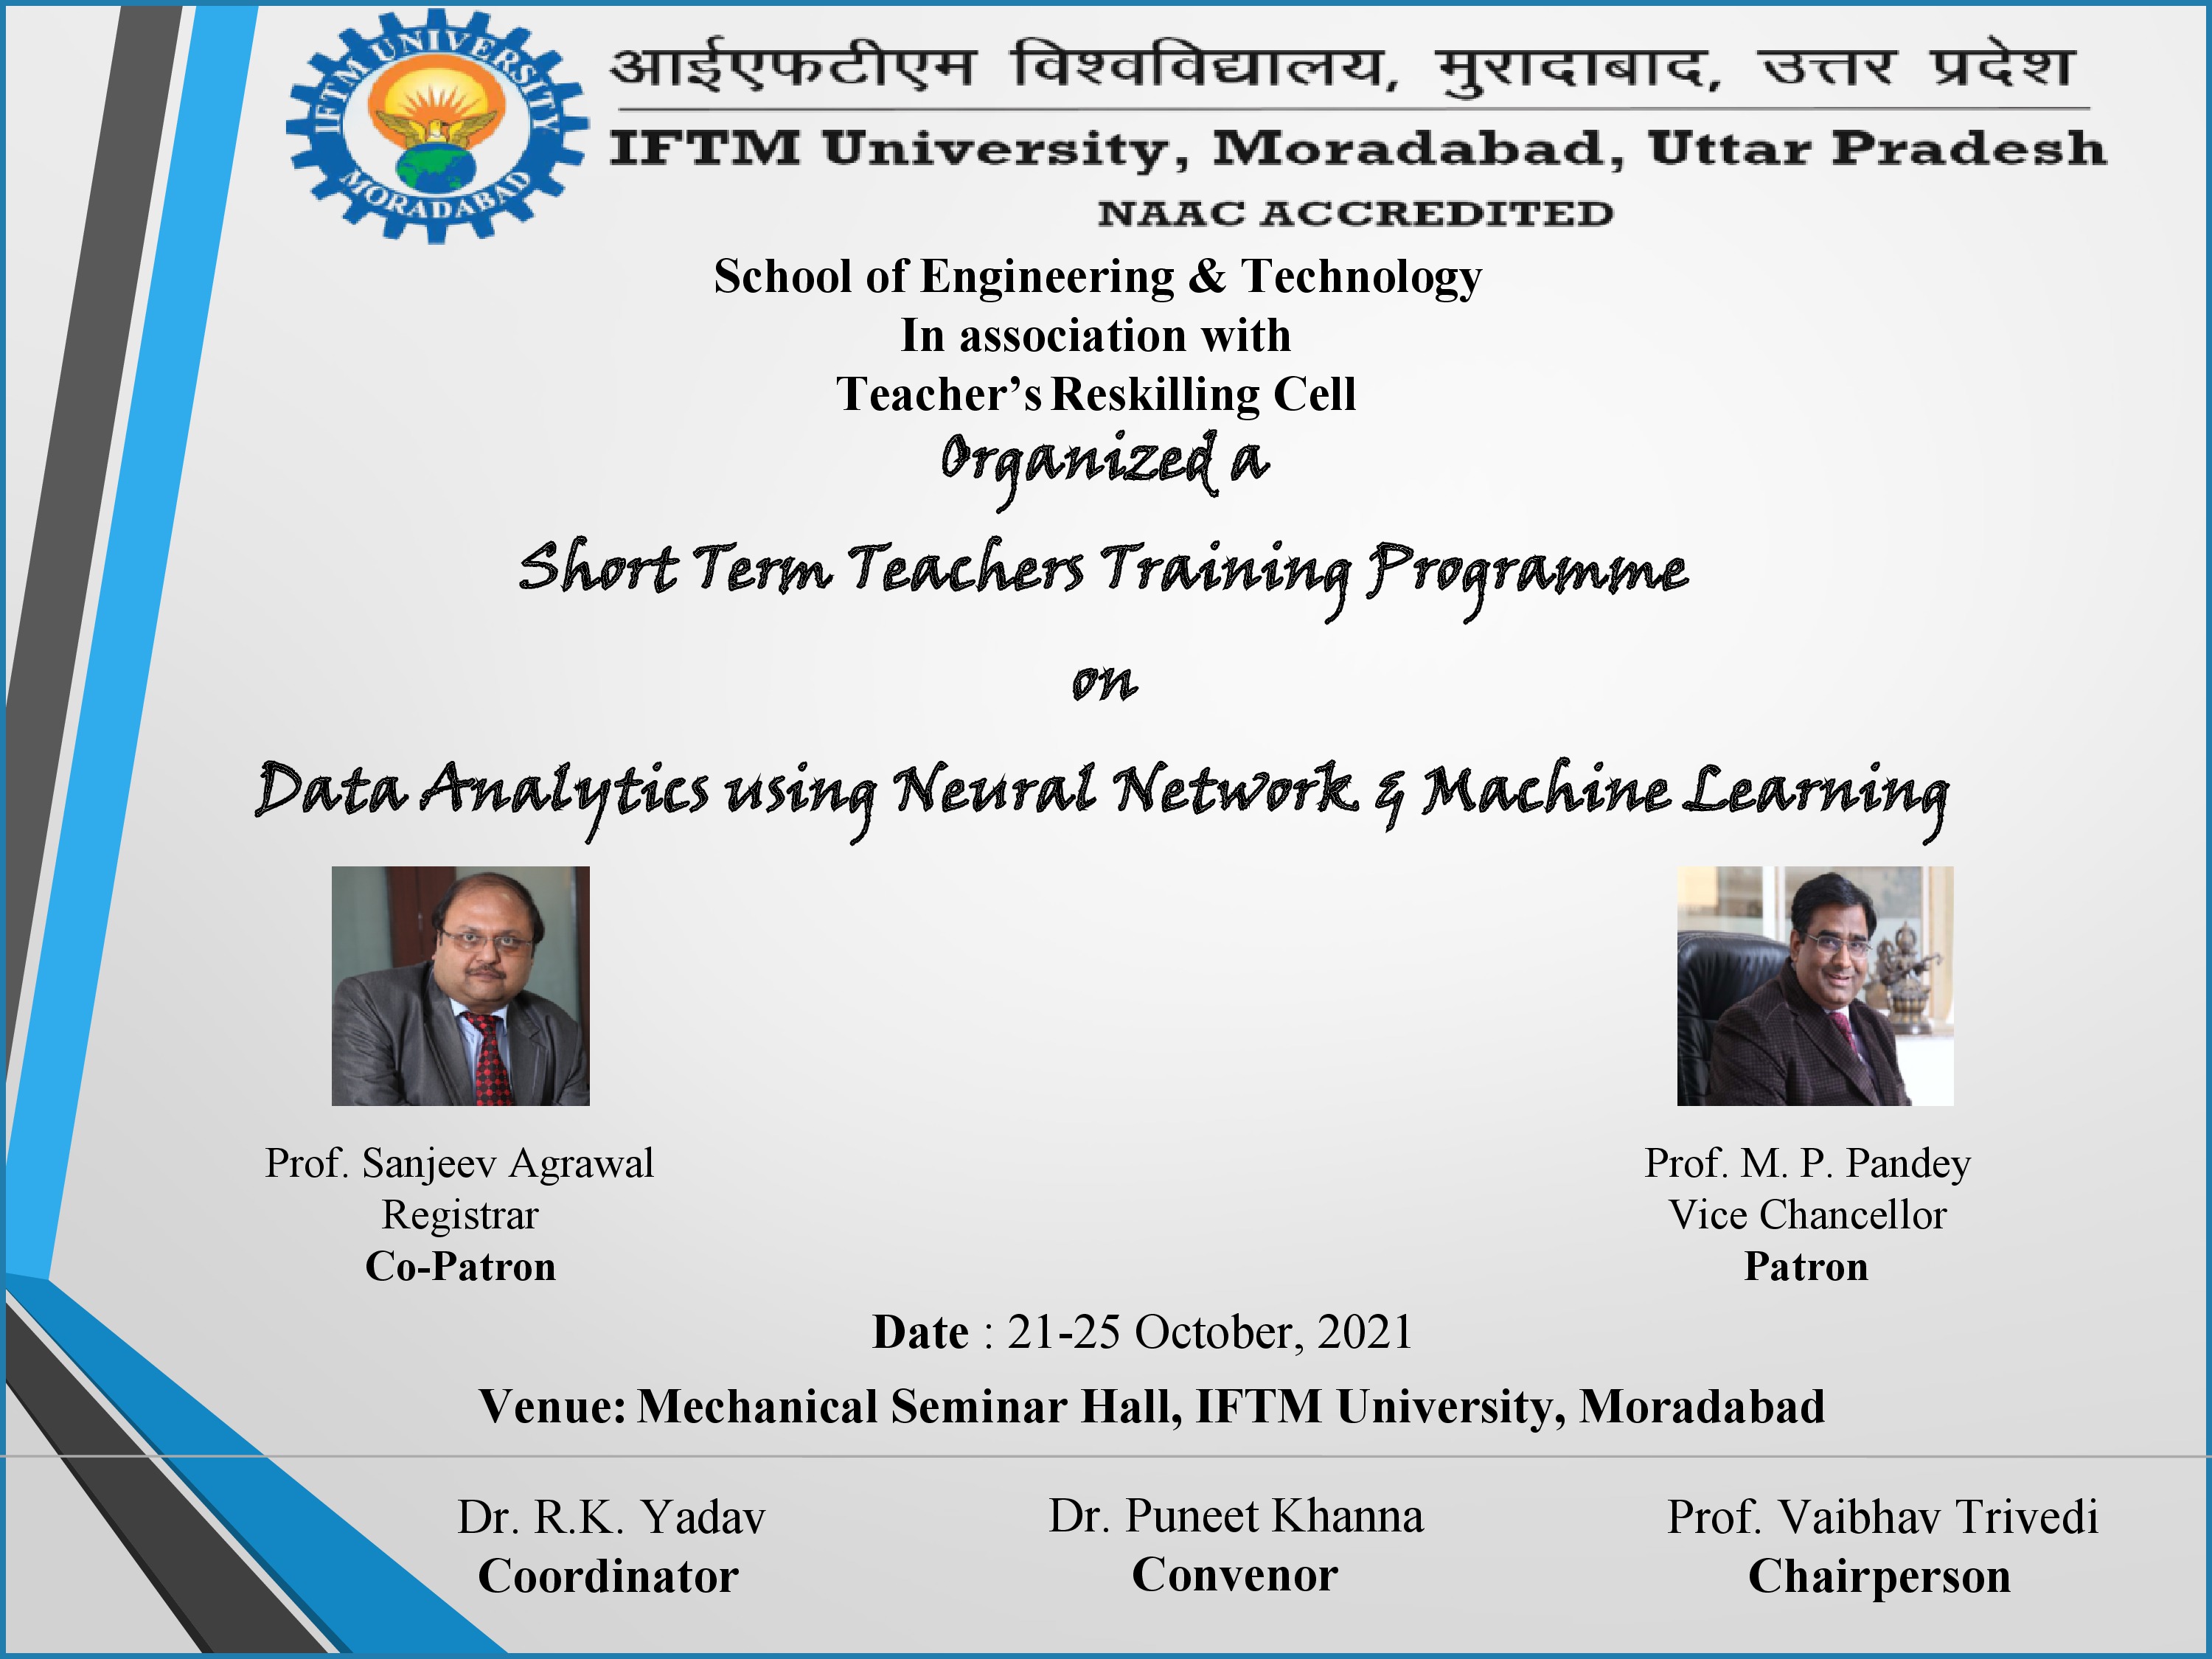 Short Term Teachers Training Programme on Data Analytics using Neural Network & Machine Learning for Advanced Computing